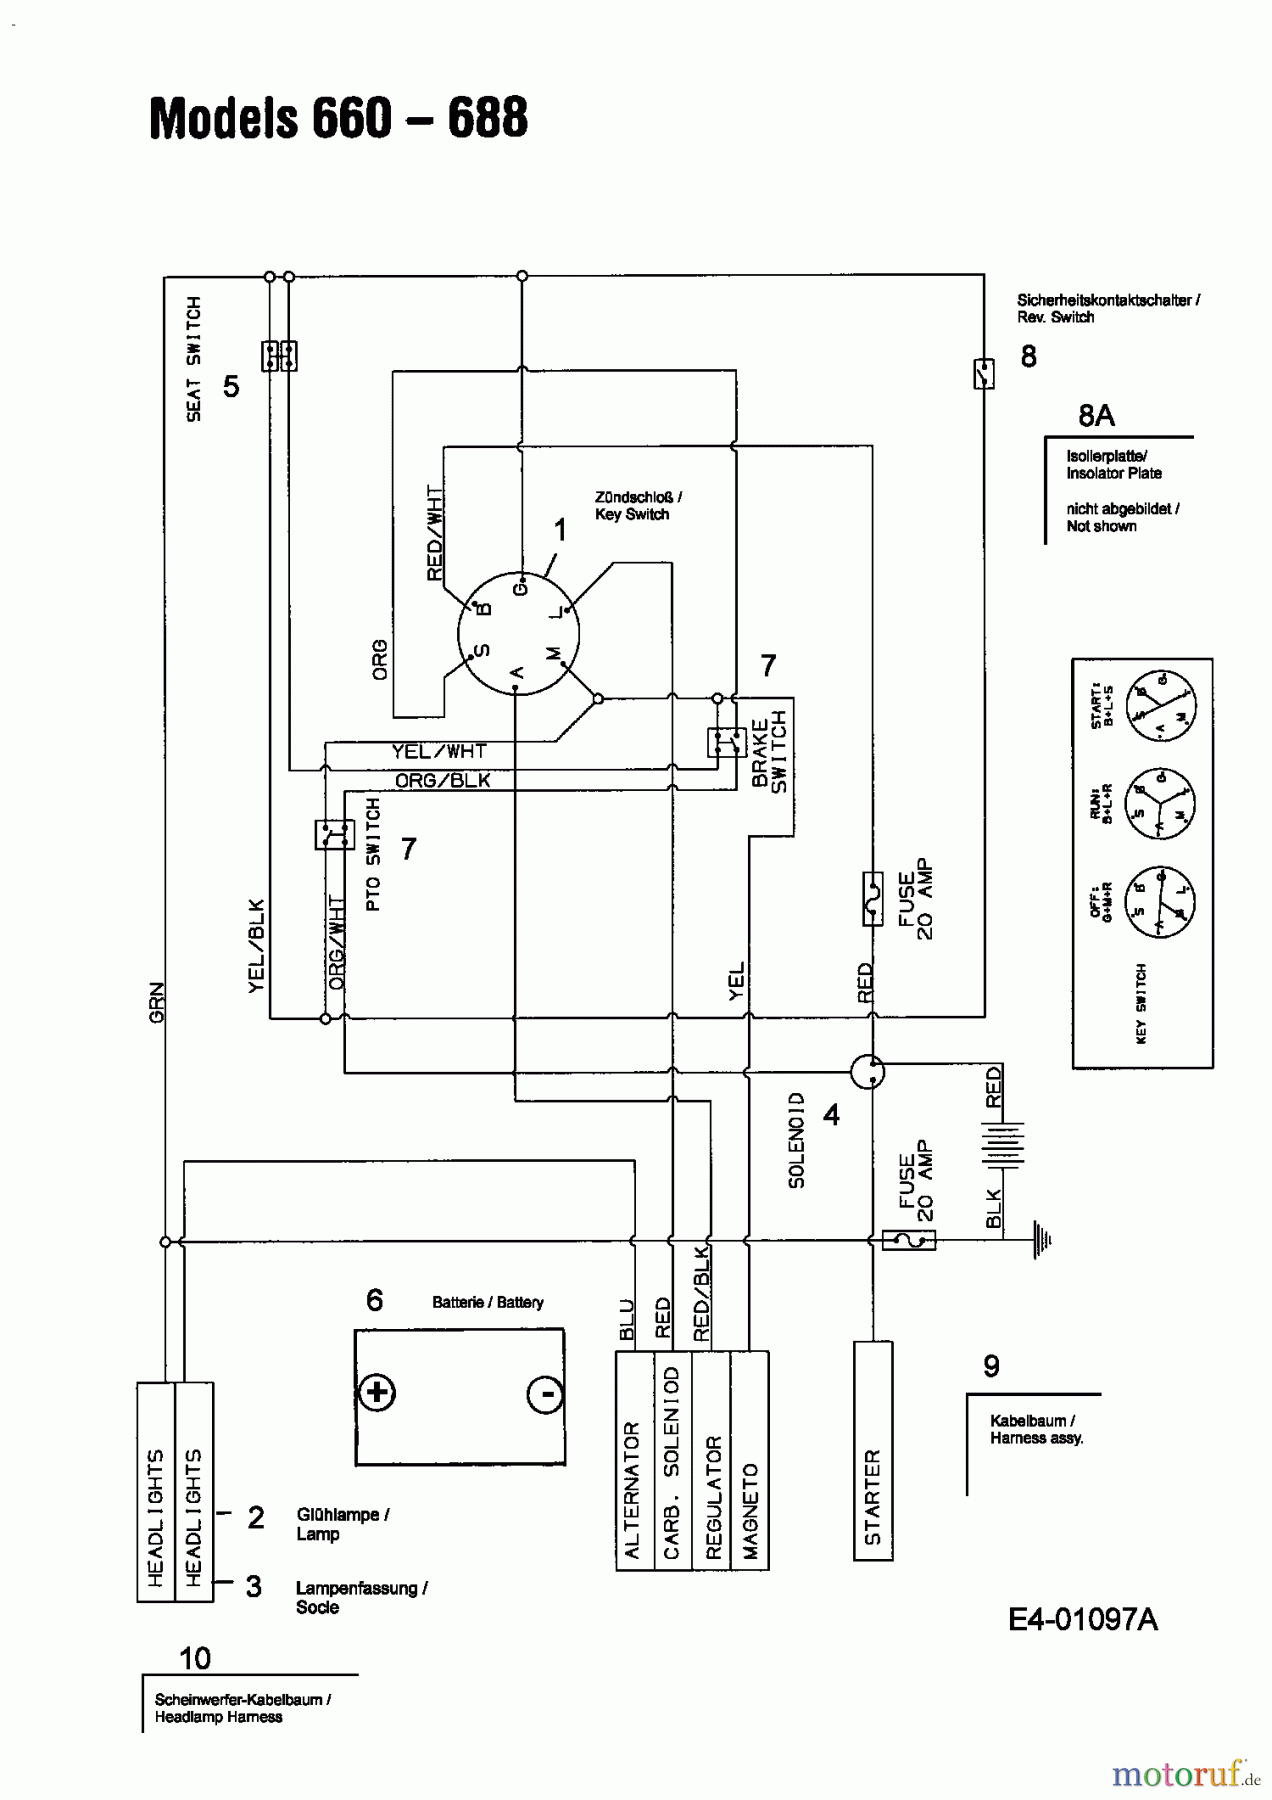  Mastercut Lawn tractors VI 125/96 13AC665F659  (2002) Wiring diagram